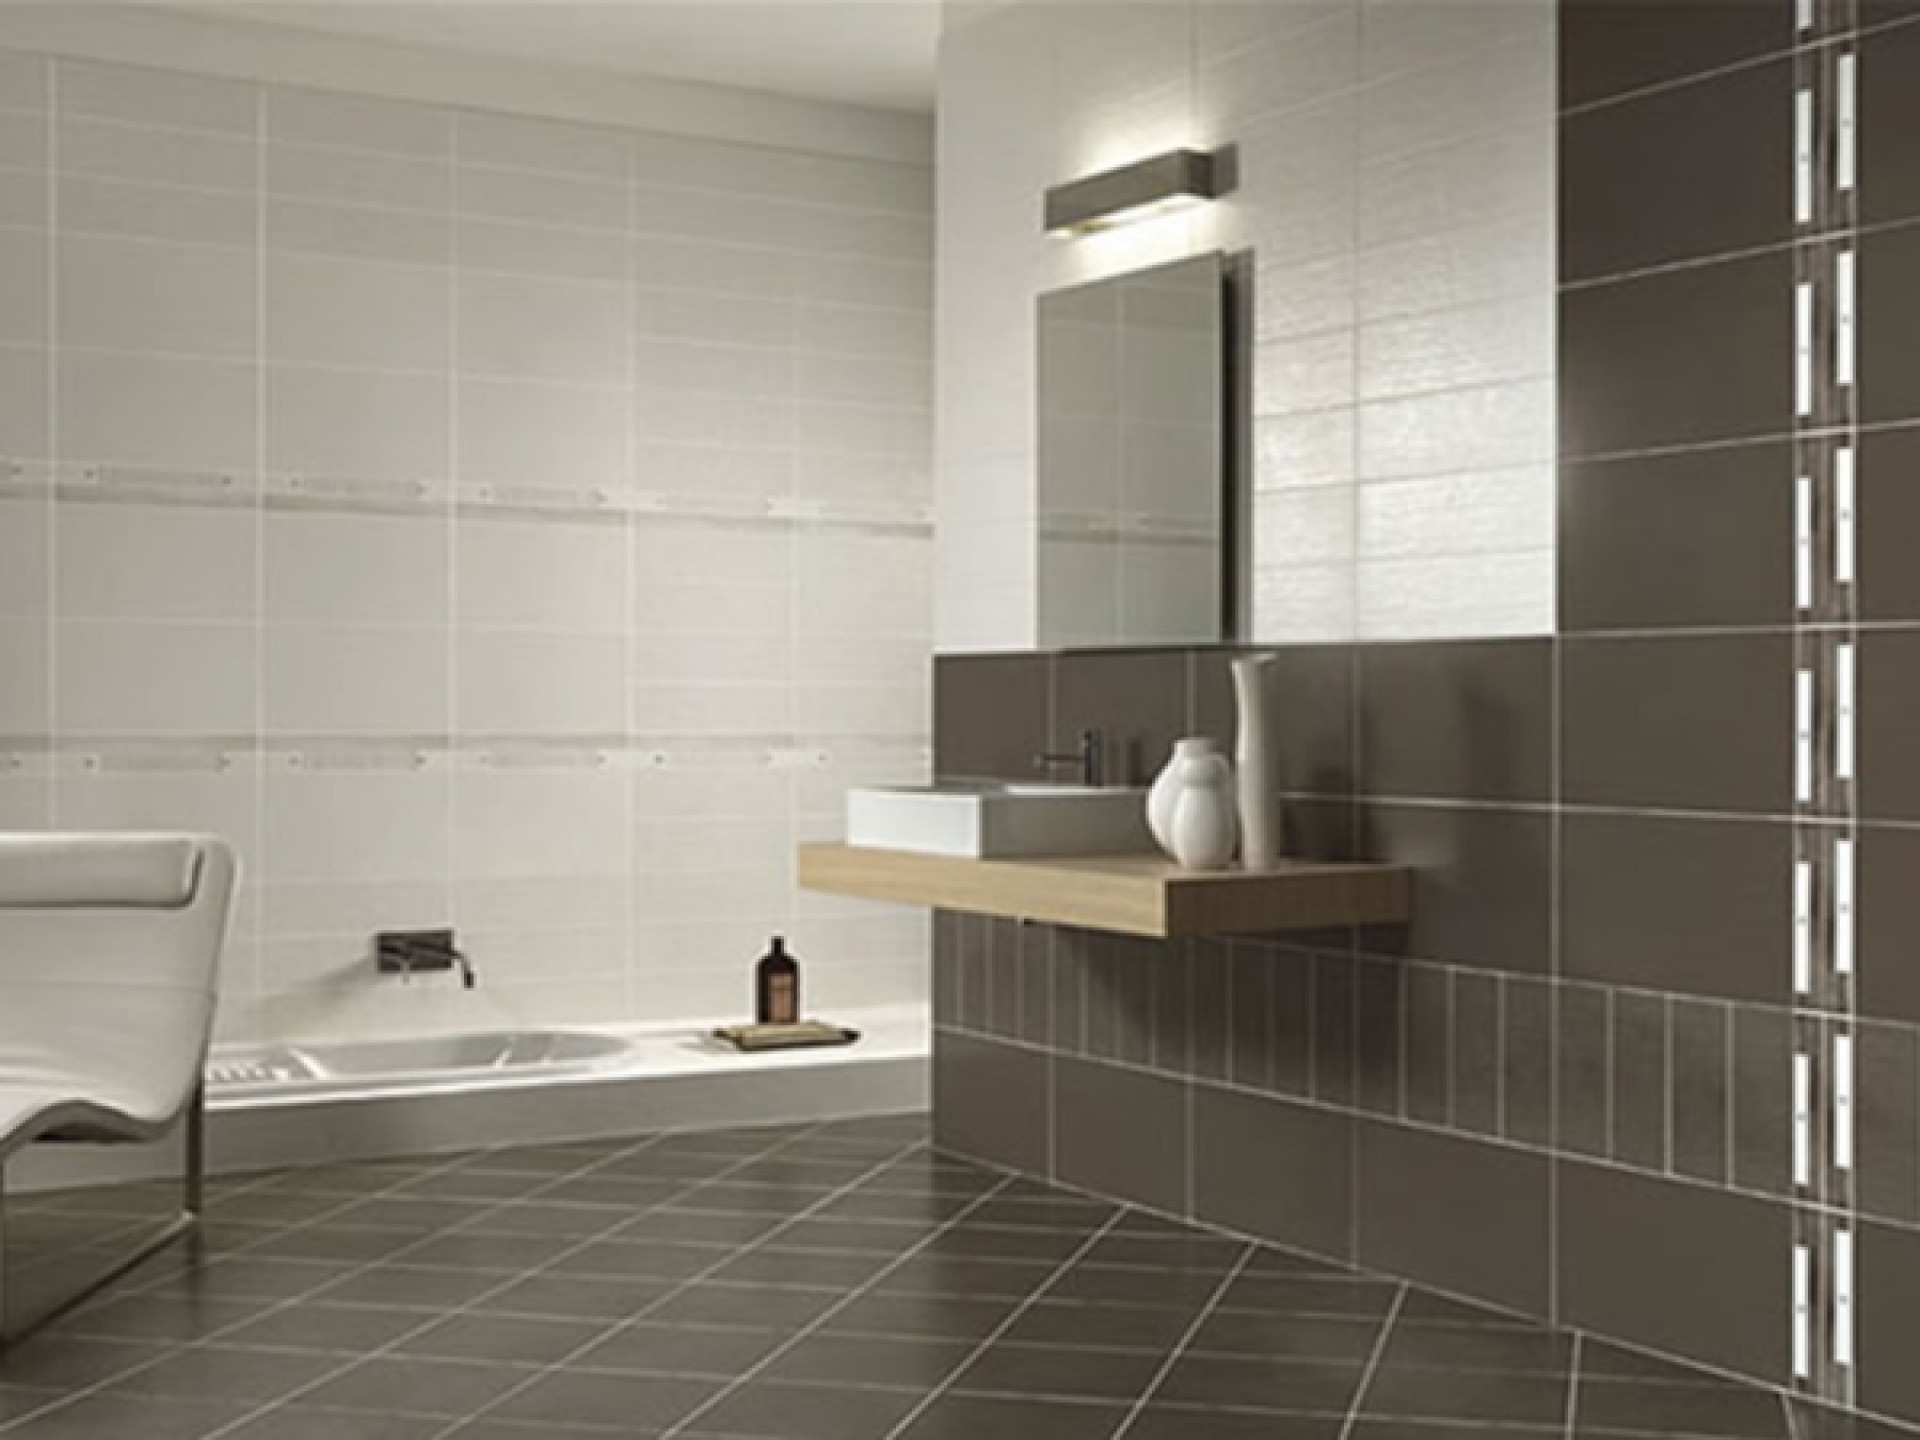 Tile A Bathroom Wall
 30 amazing pictures decorative bathroom tile designs ideas